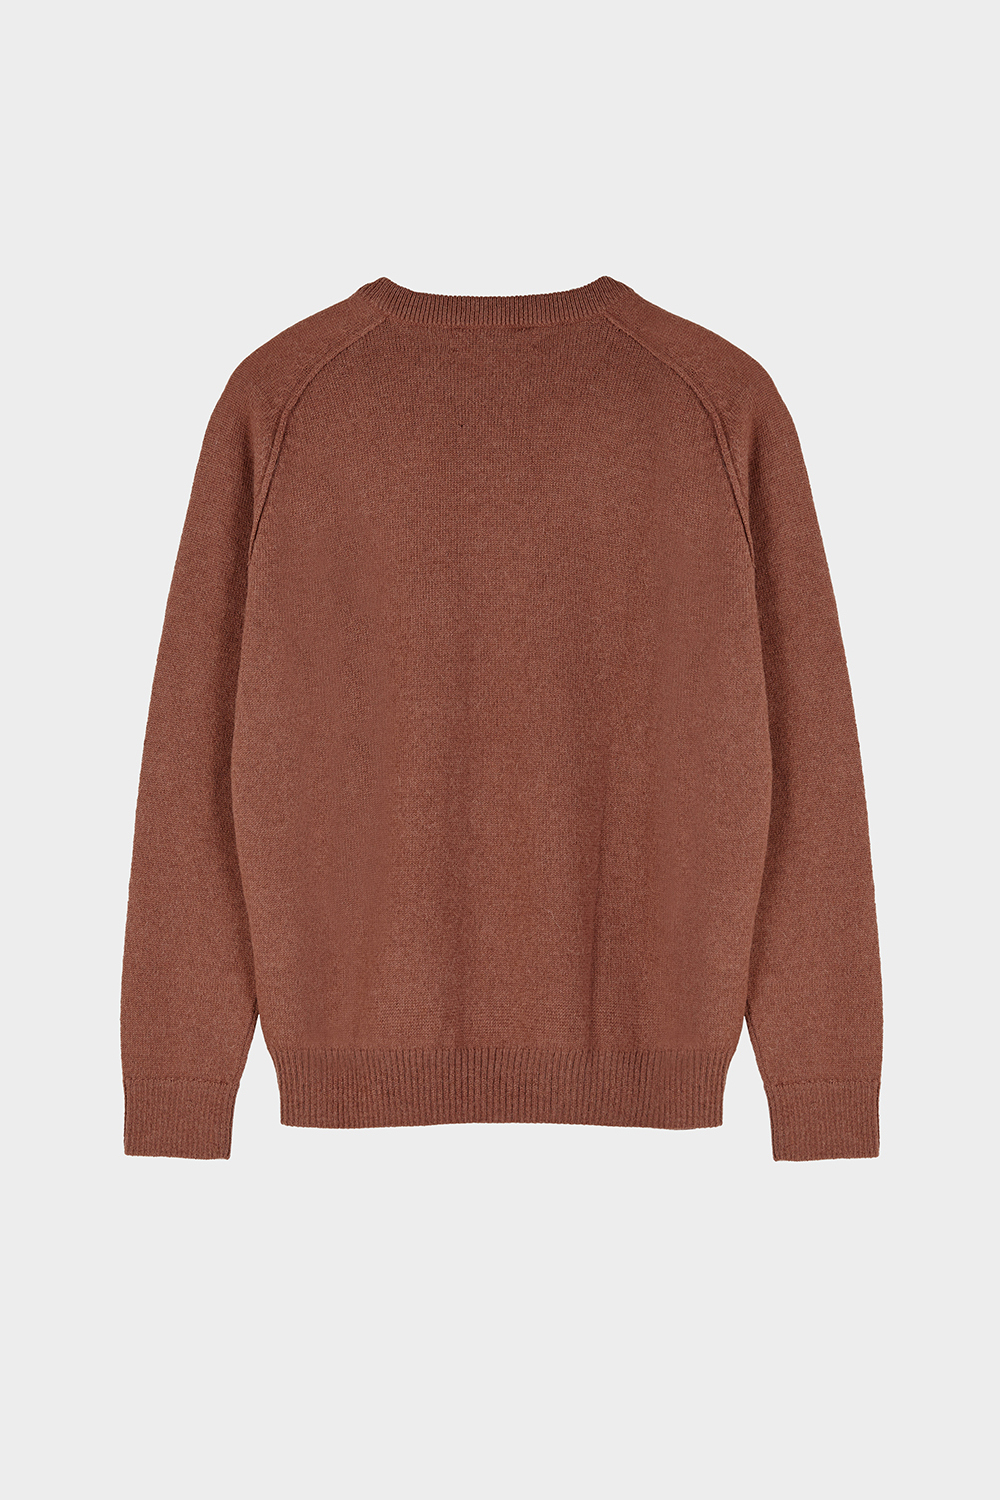 sweater ceibo avellana 2_1000x1500_72